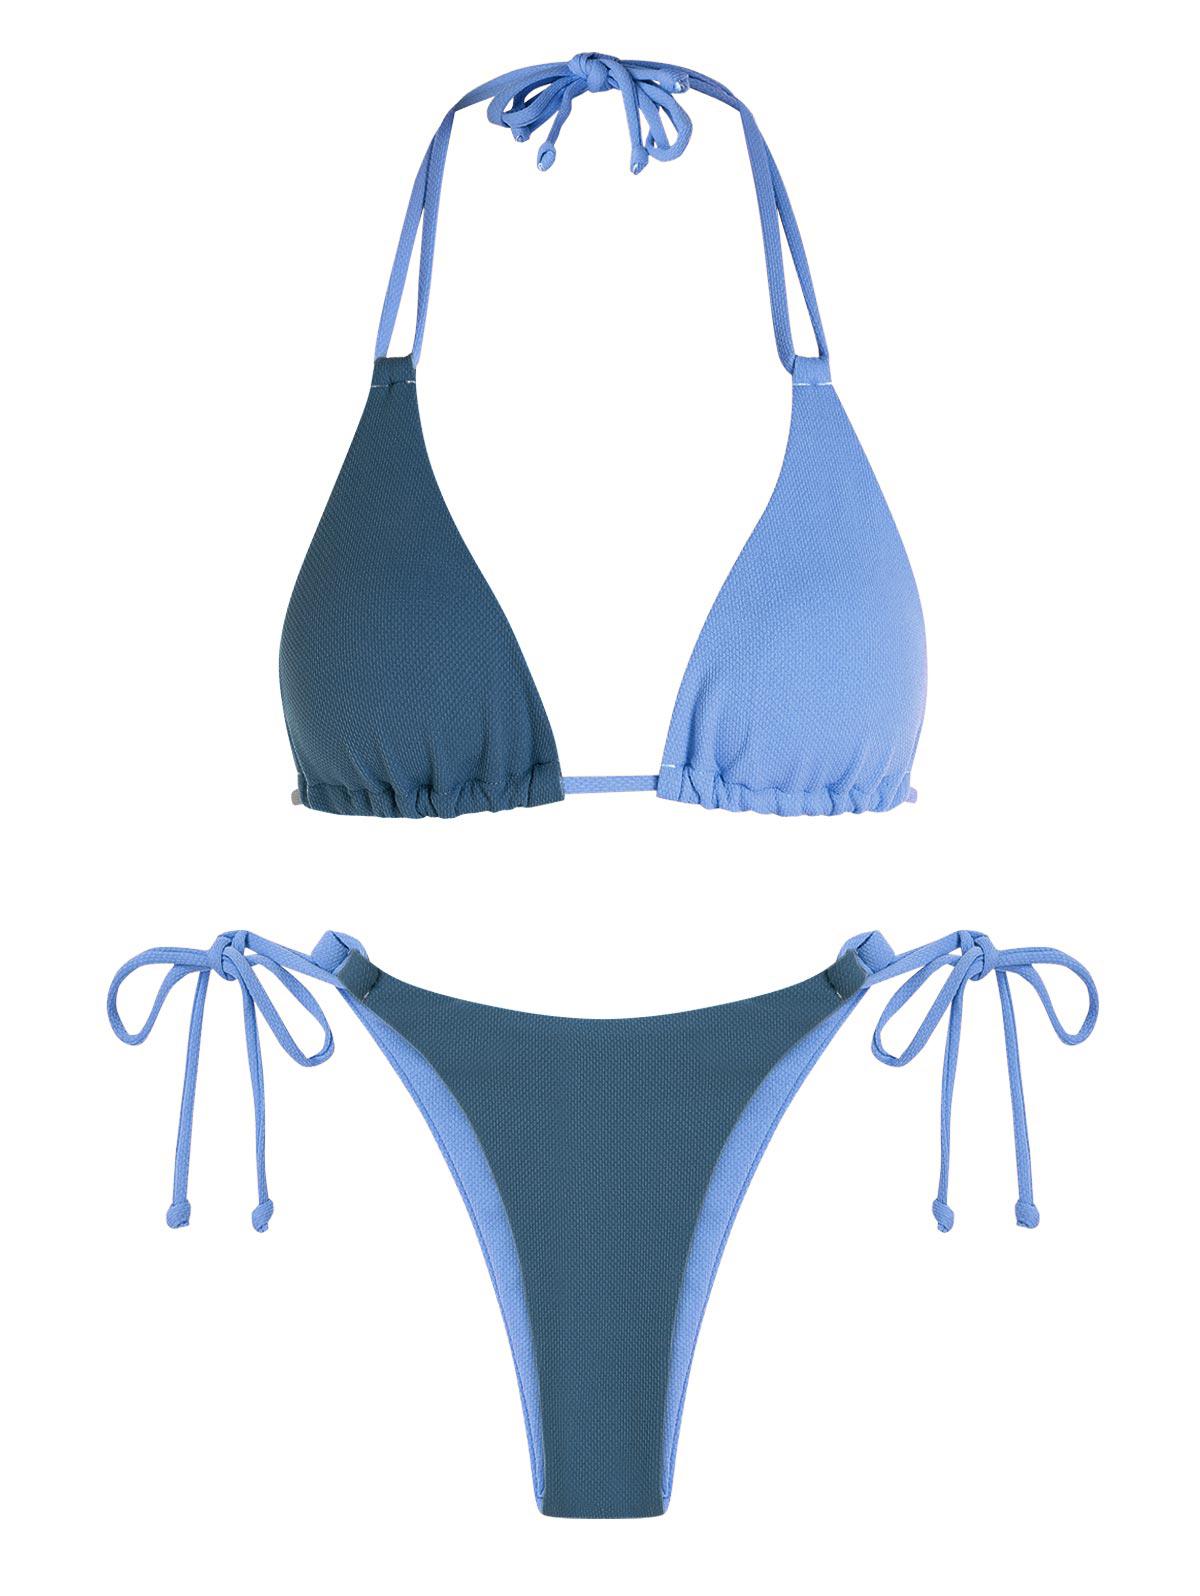 ZAFUL Color Block Textured Halter String Bikini Set S Deep blue